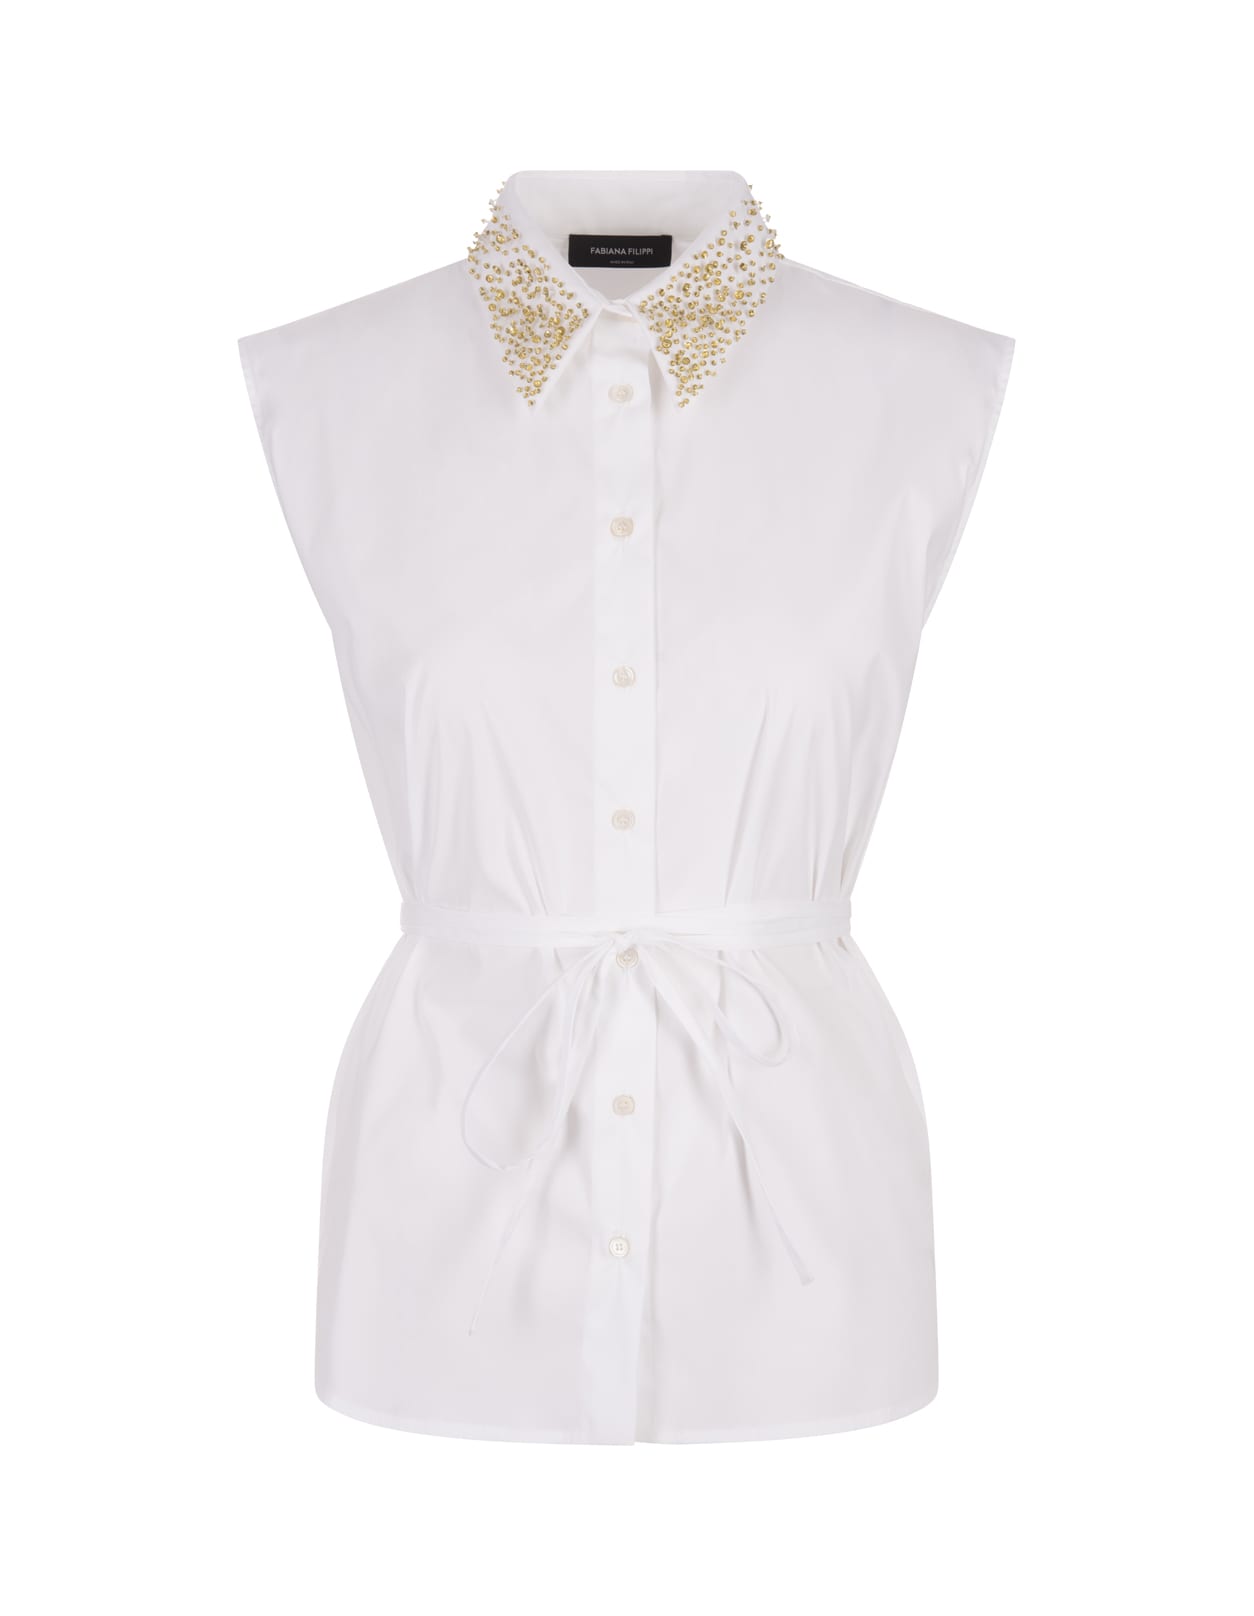 White Sleeveless Shirt With Jewelled Collar